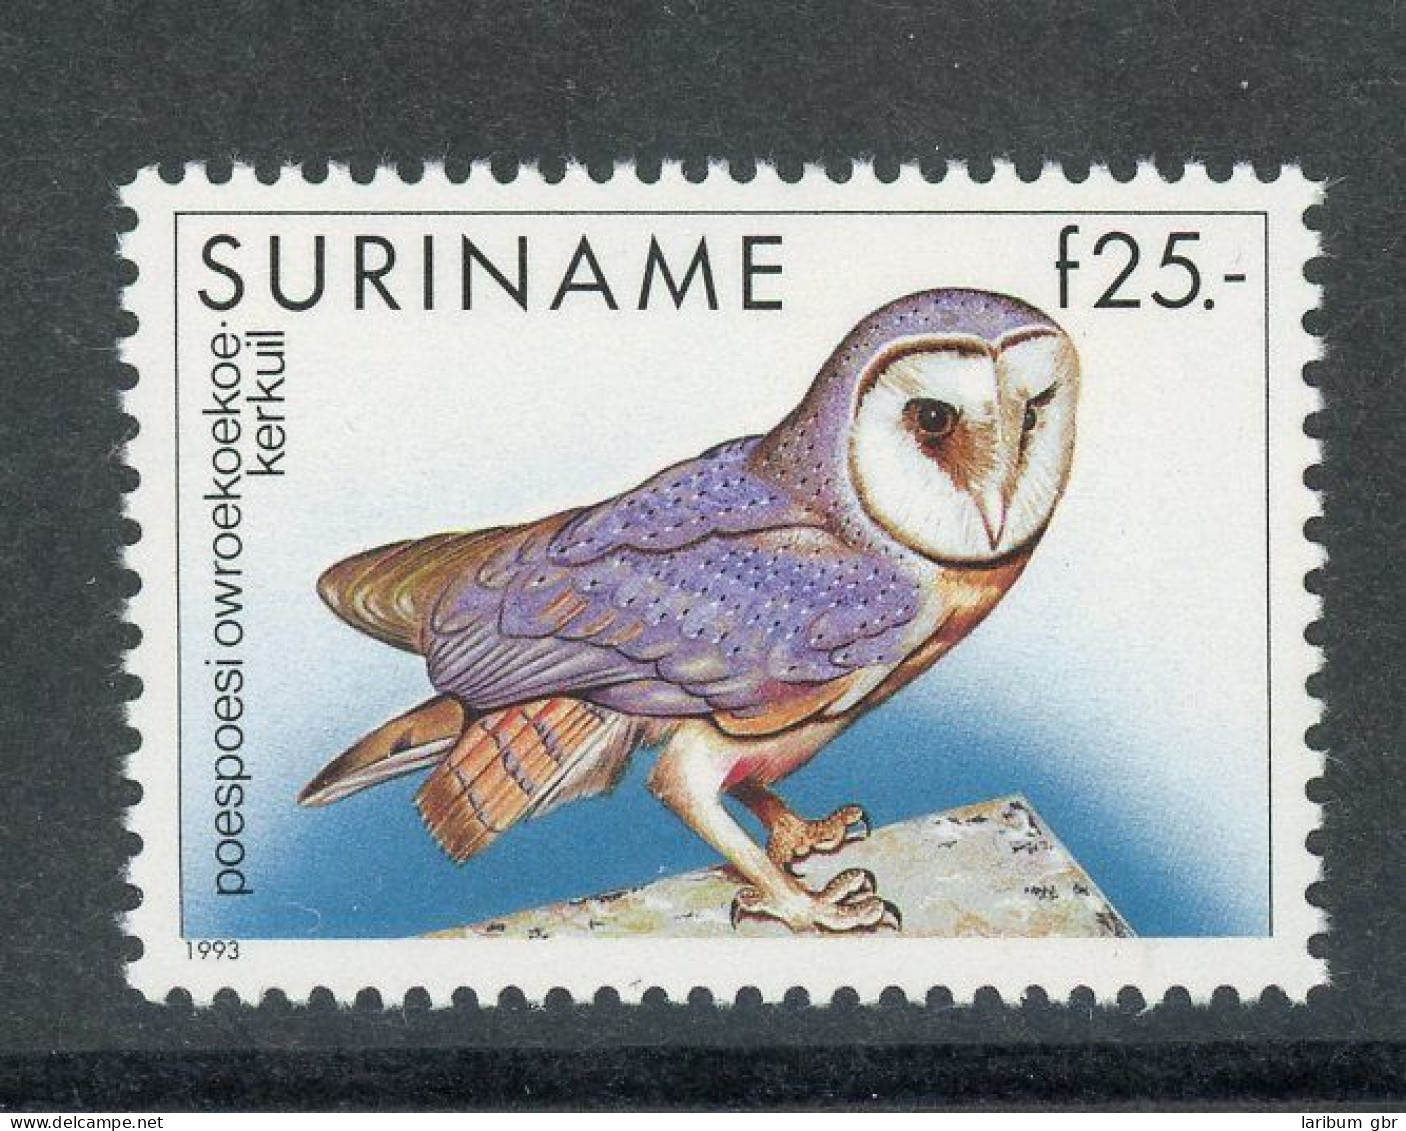 Surinam 1429 Postfrisch Eule #HE819 - Suriname